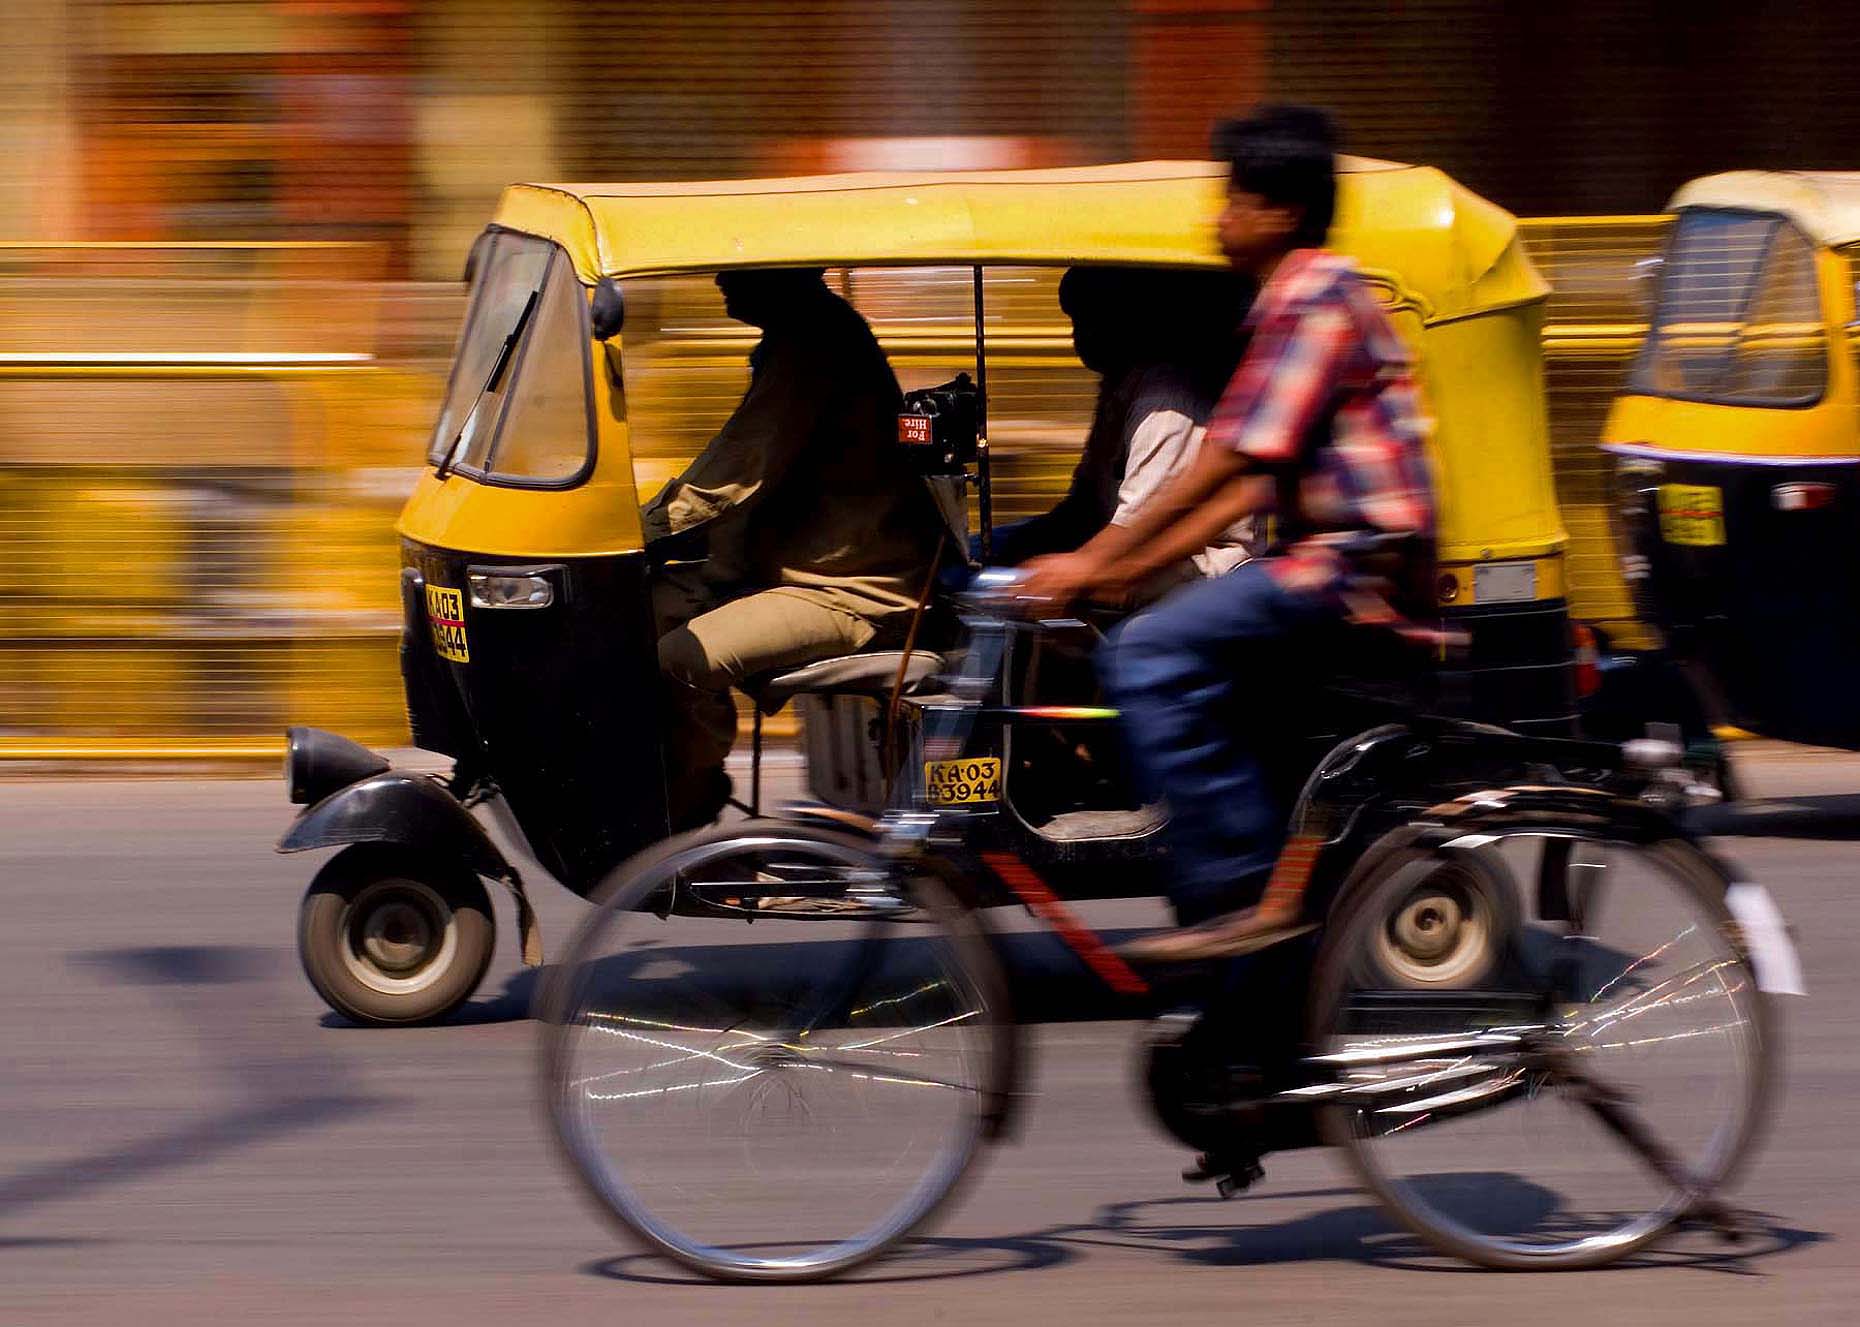 autorickshaw-bicycle-bangalore-panning-india-11